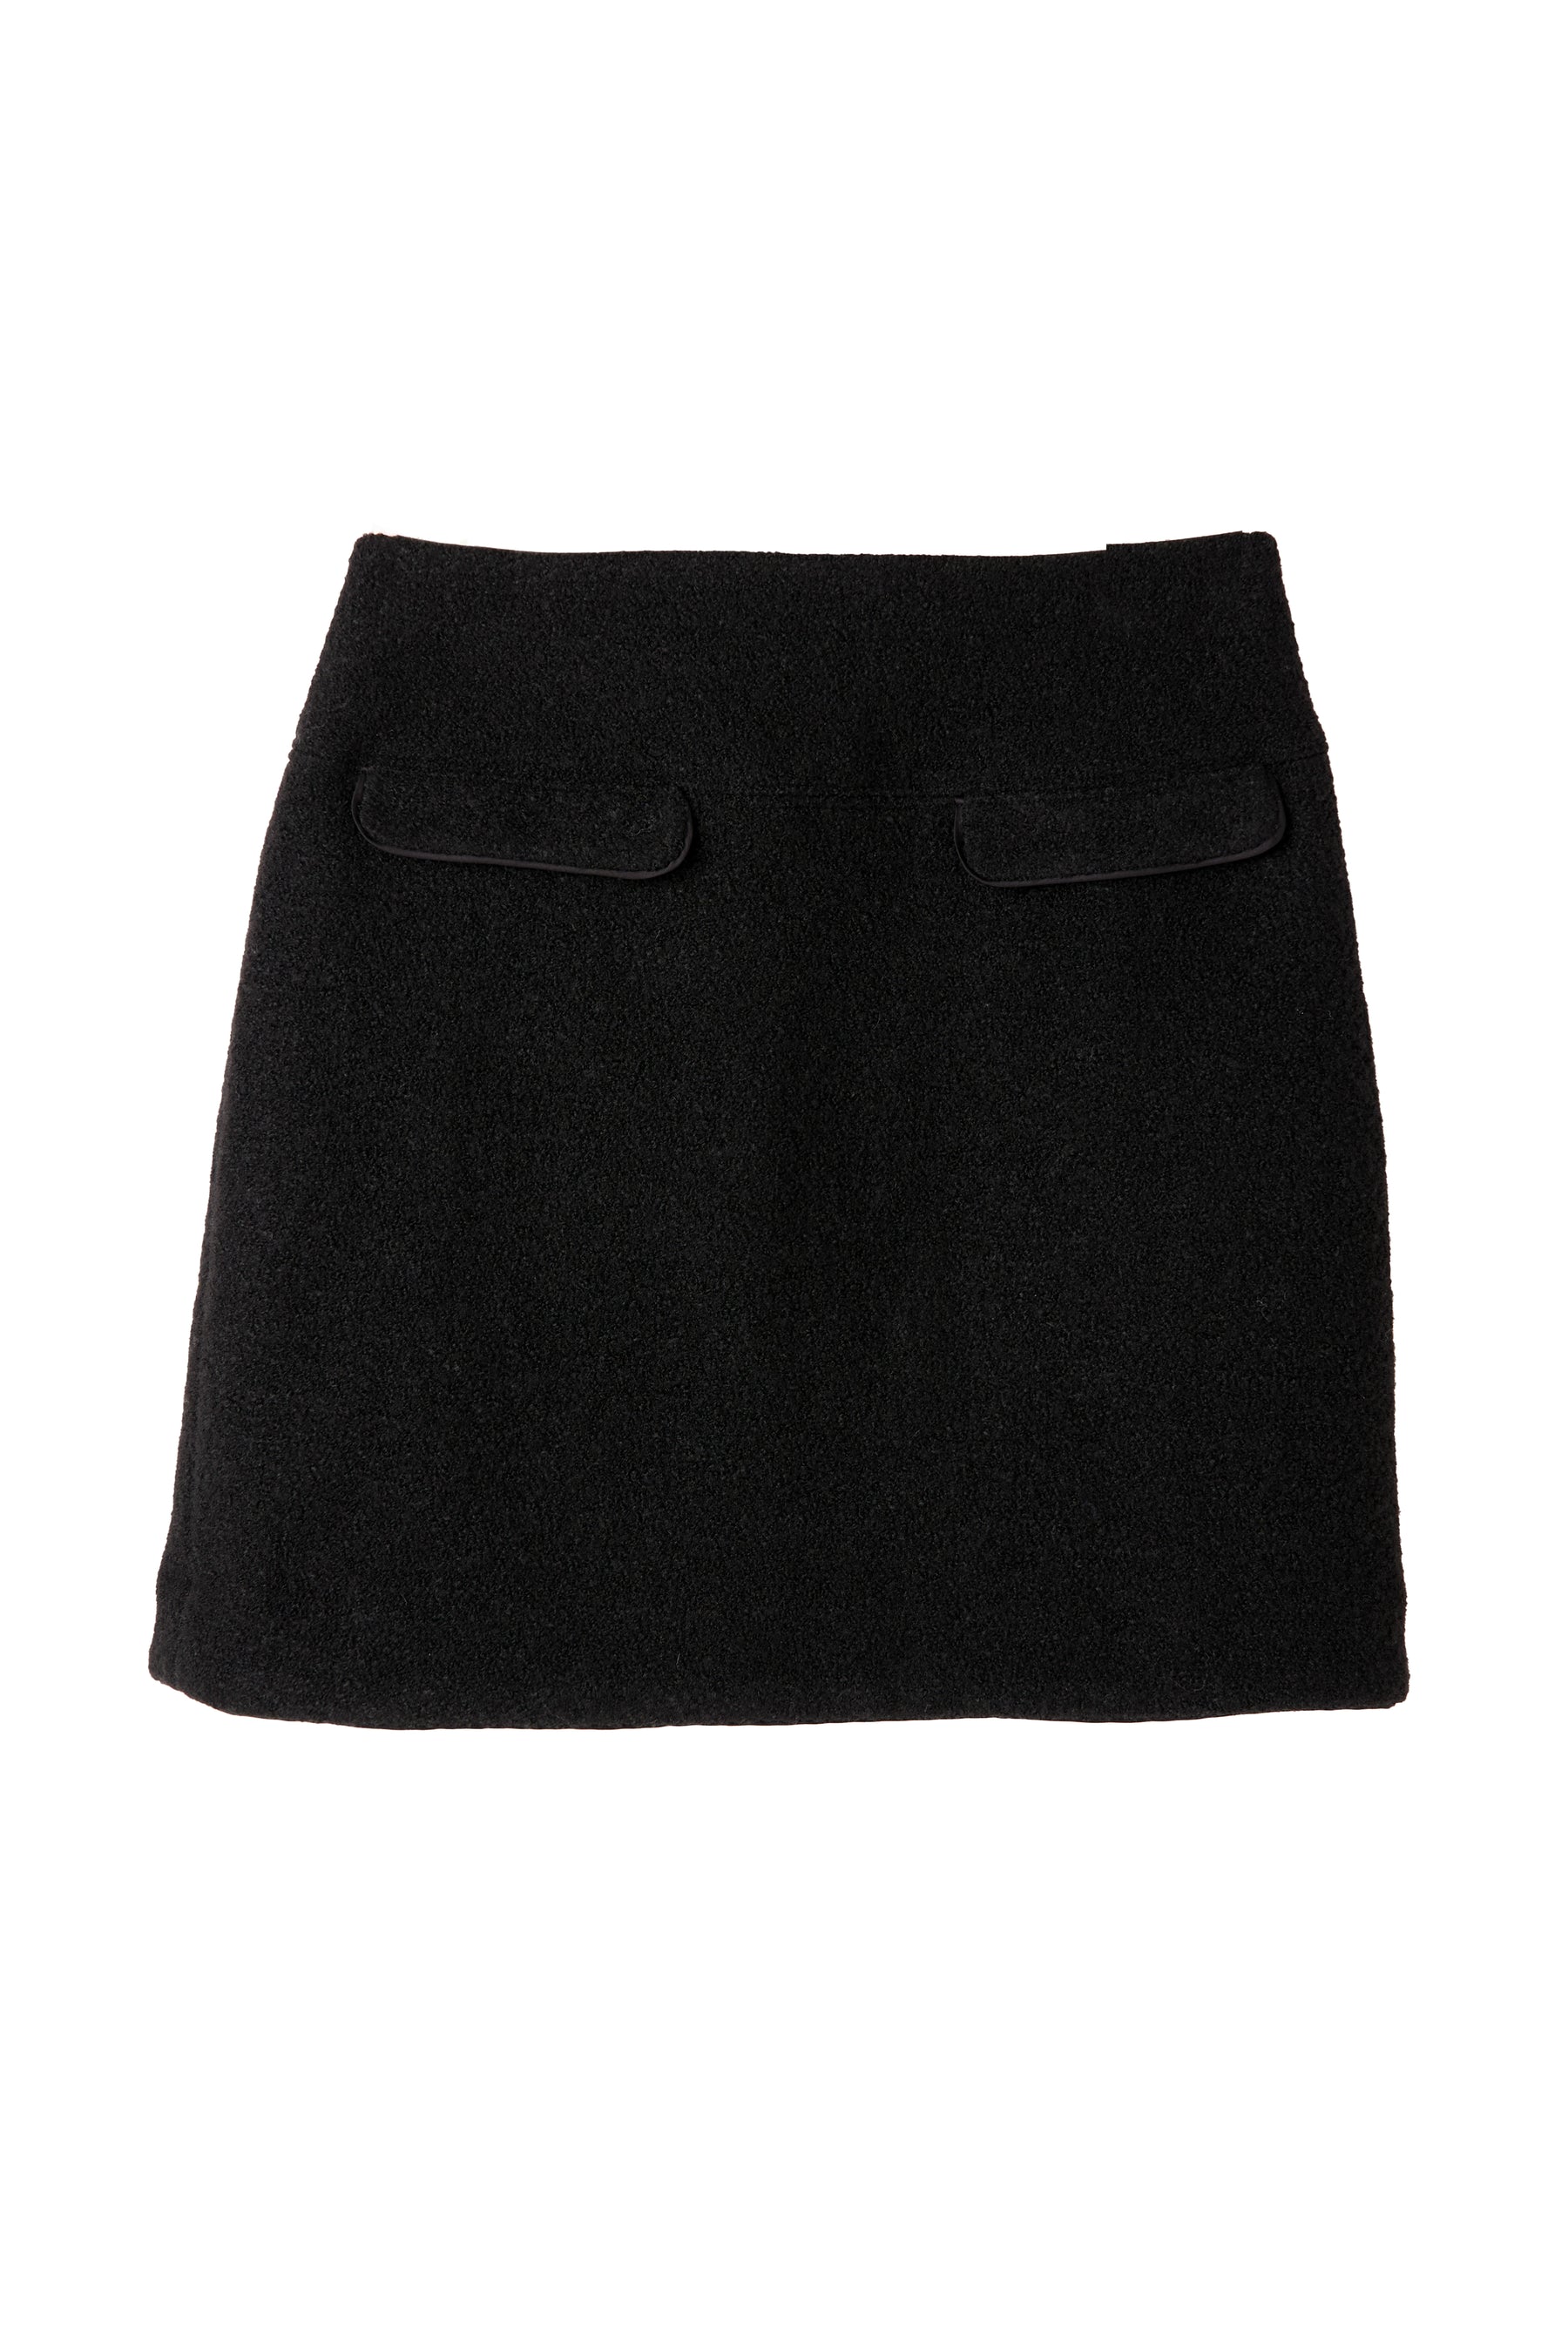 Hemingway Boucle Skirt